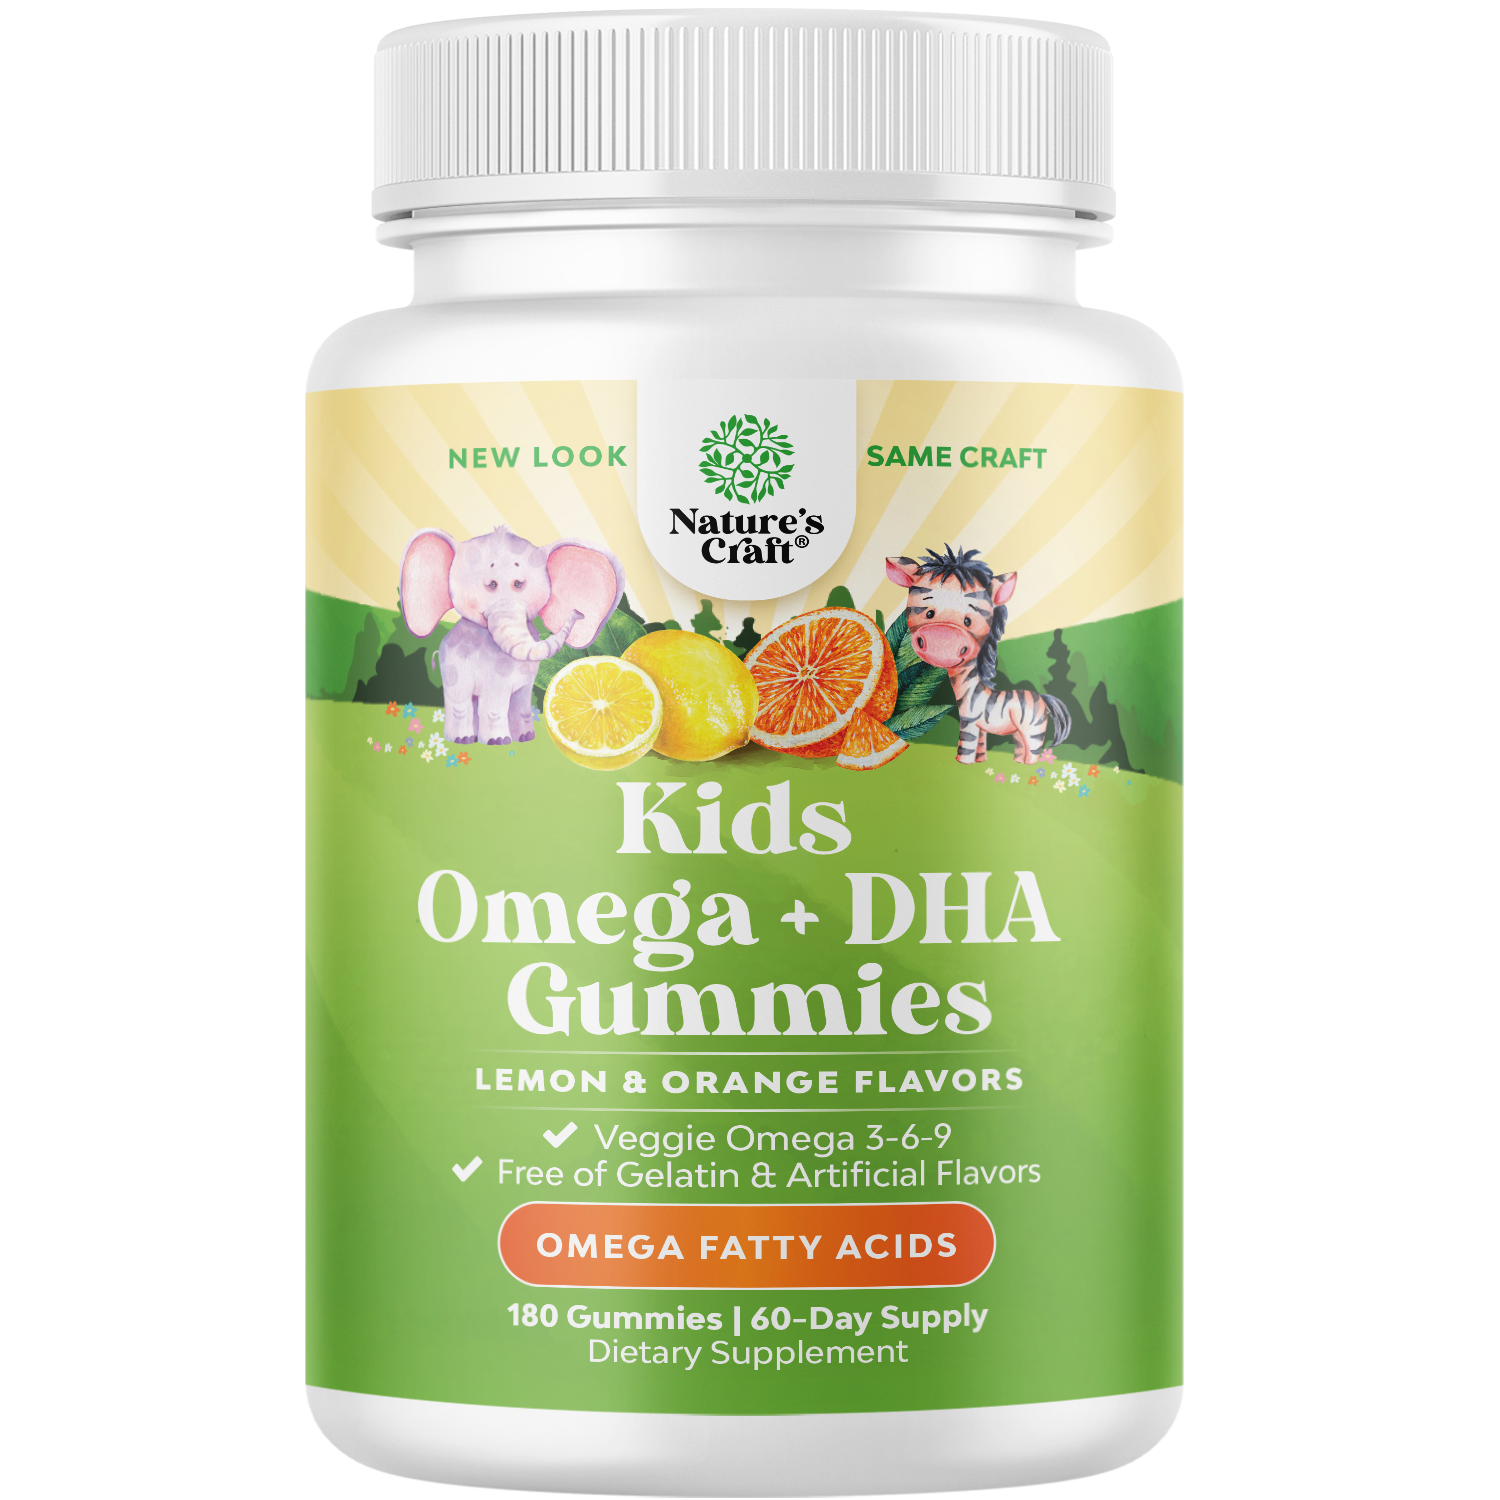 Kids Omega + DHA Gummies - 180 Gummies